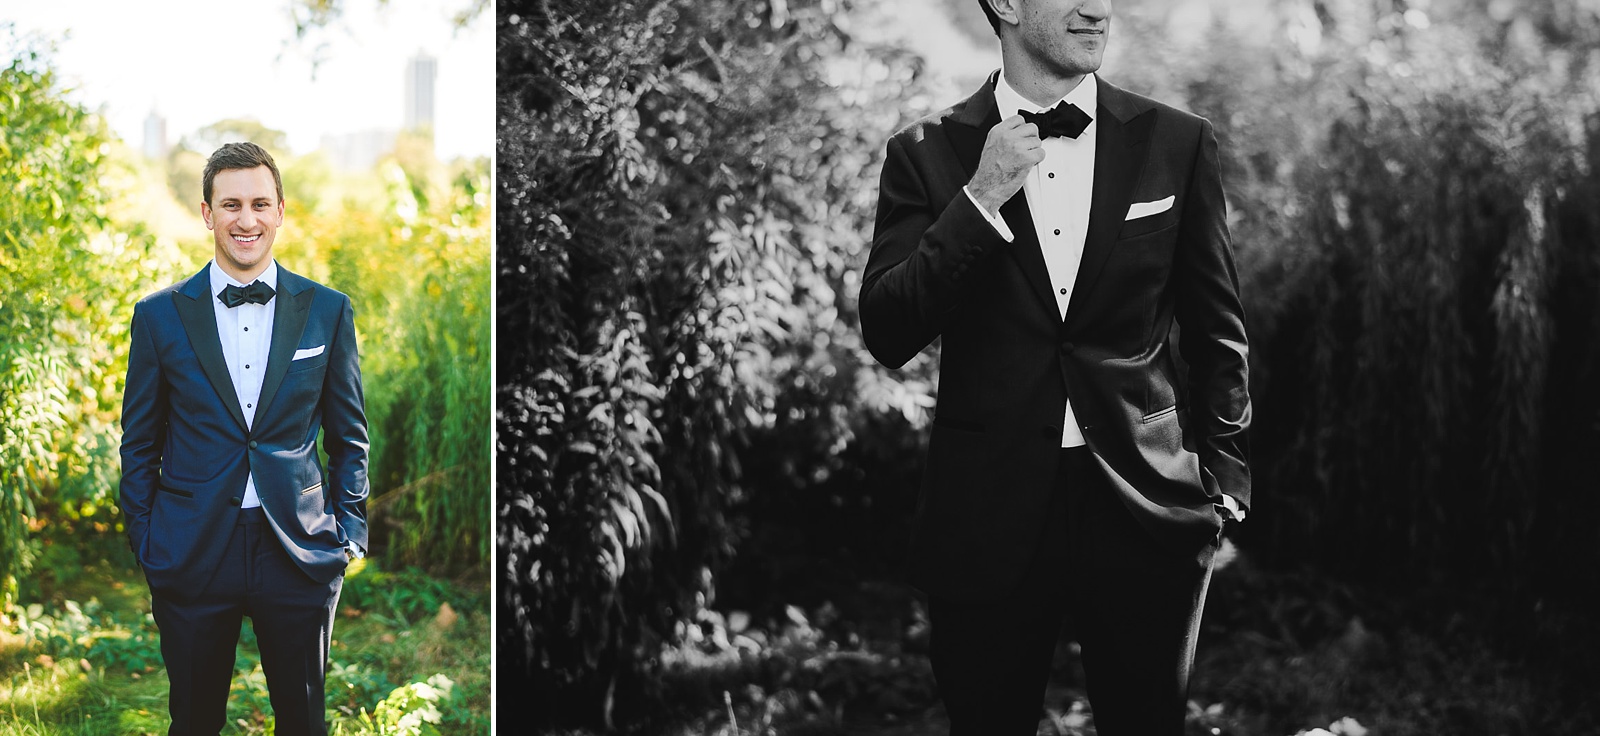 21 groom inspiration in cihcago - Morgan's on Fulton Wedding Photos // Jessica + Bill